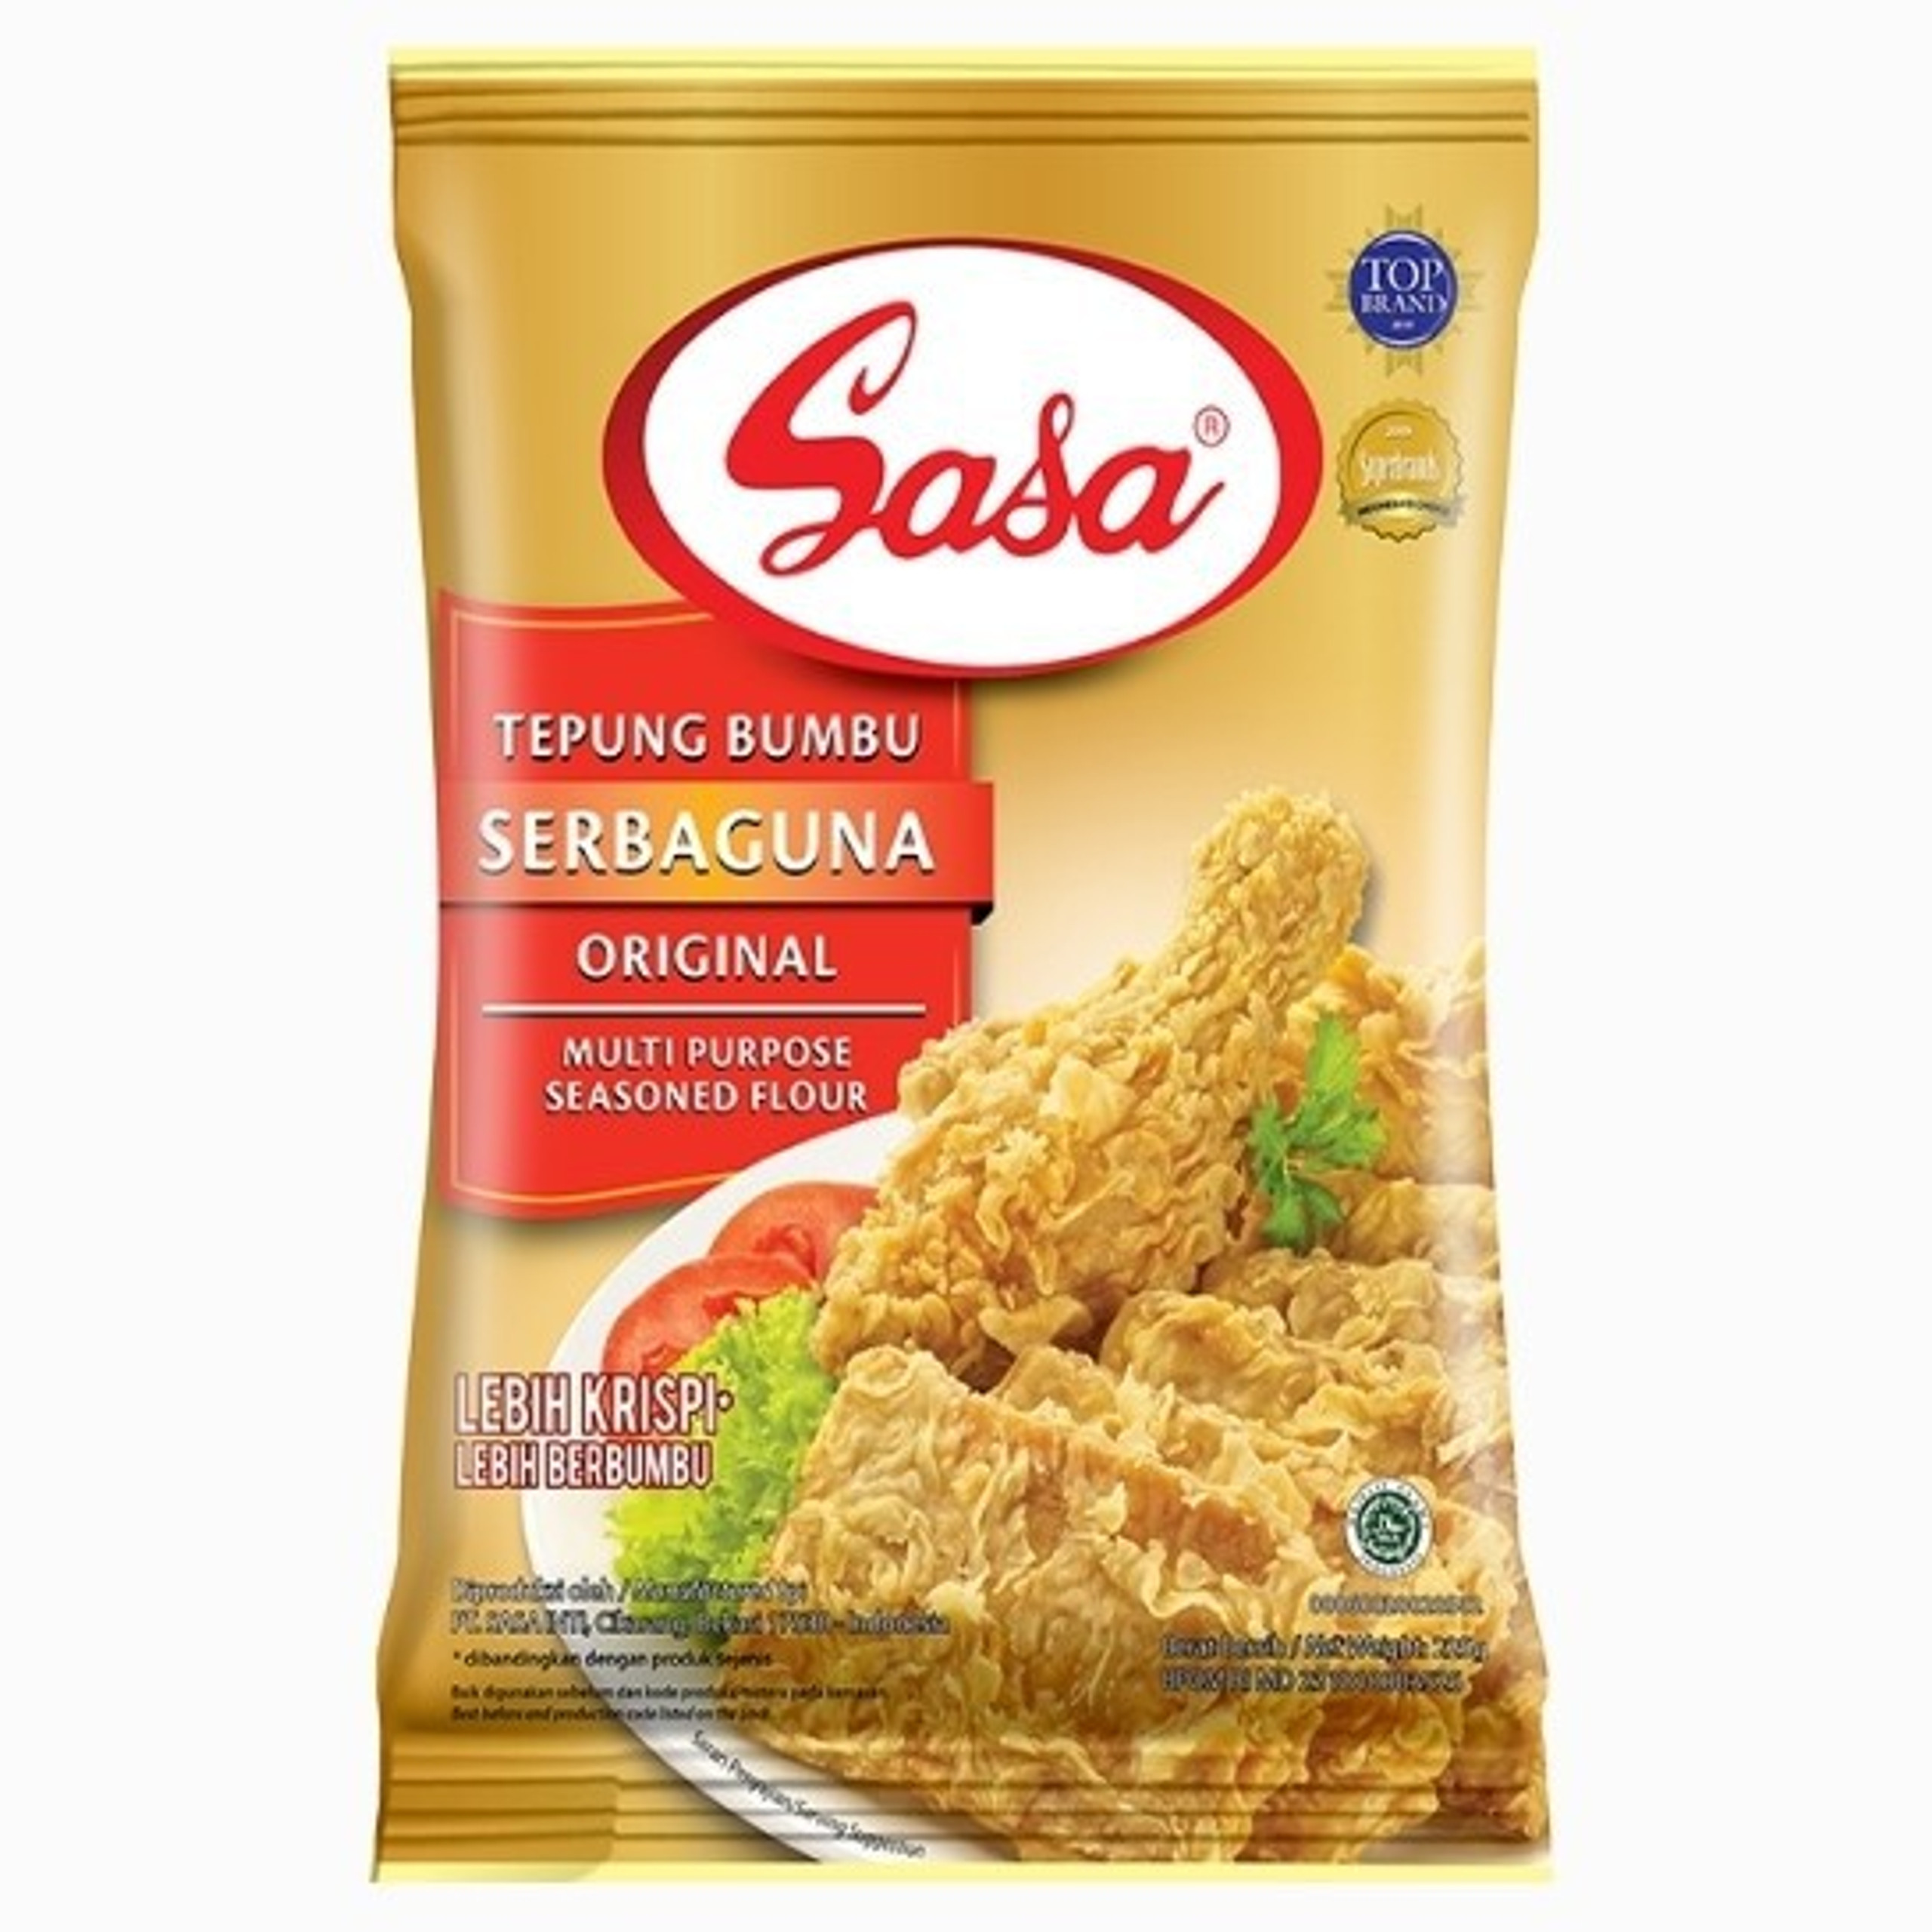 Sasa Tepung Bumbu Serbaguna Original(Multi Purpose Seasoned Flour) 225